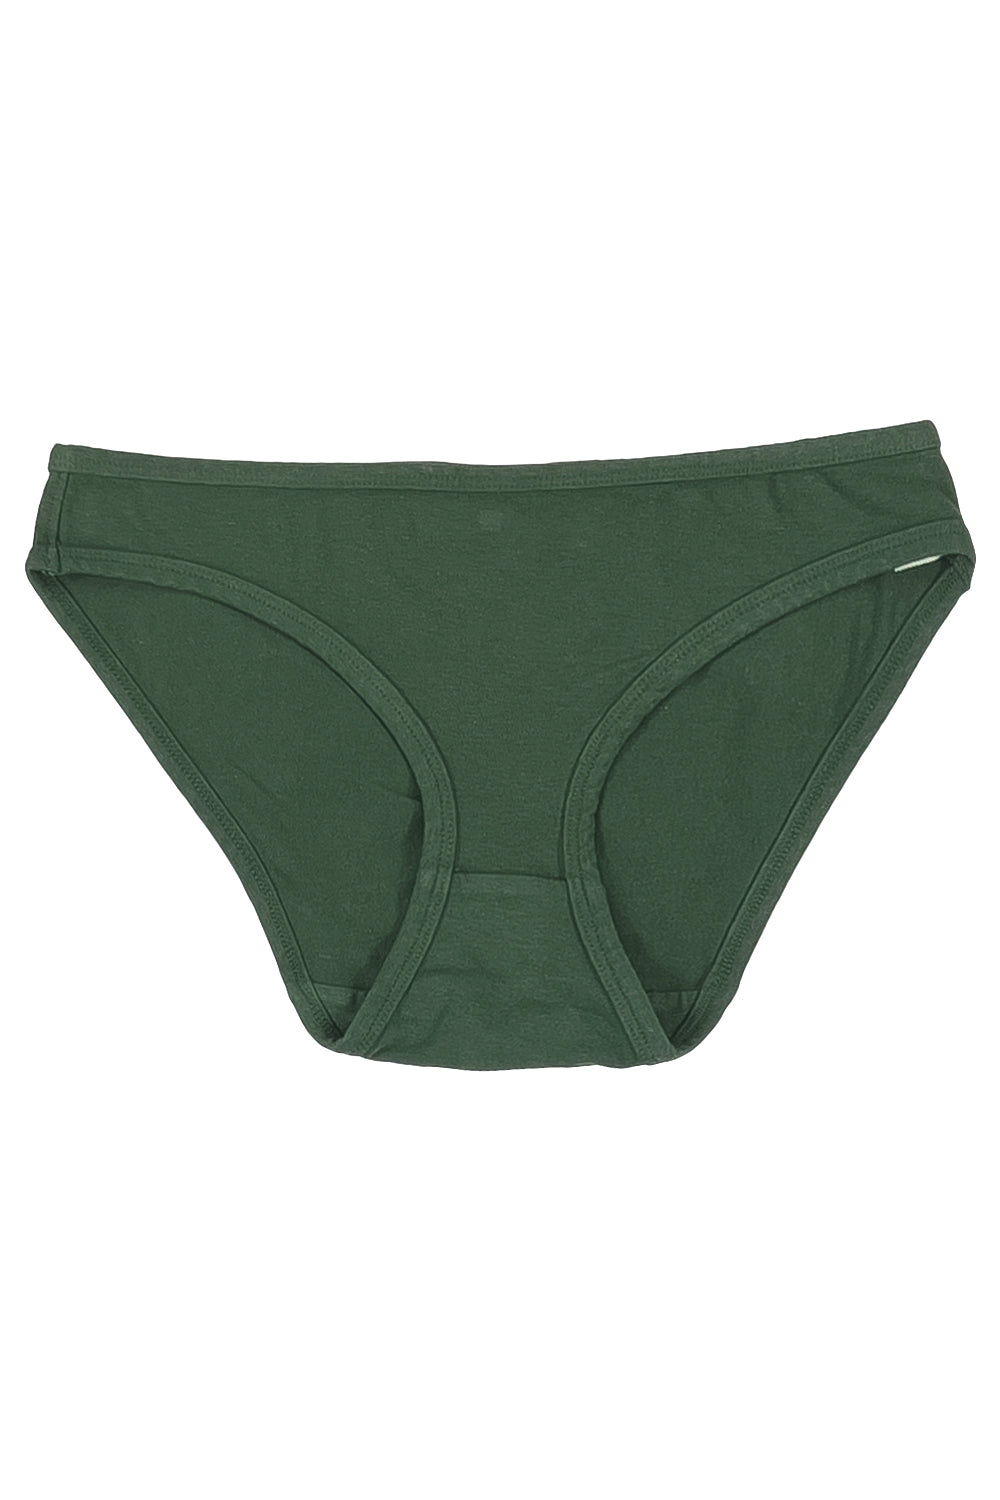 Bikini Brief | Jungmaven Hemp Clothing & Accessories / Color: Hunter Green